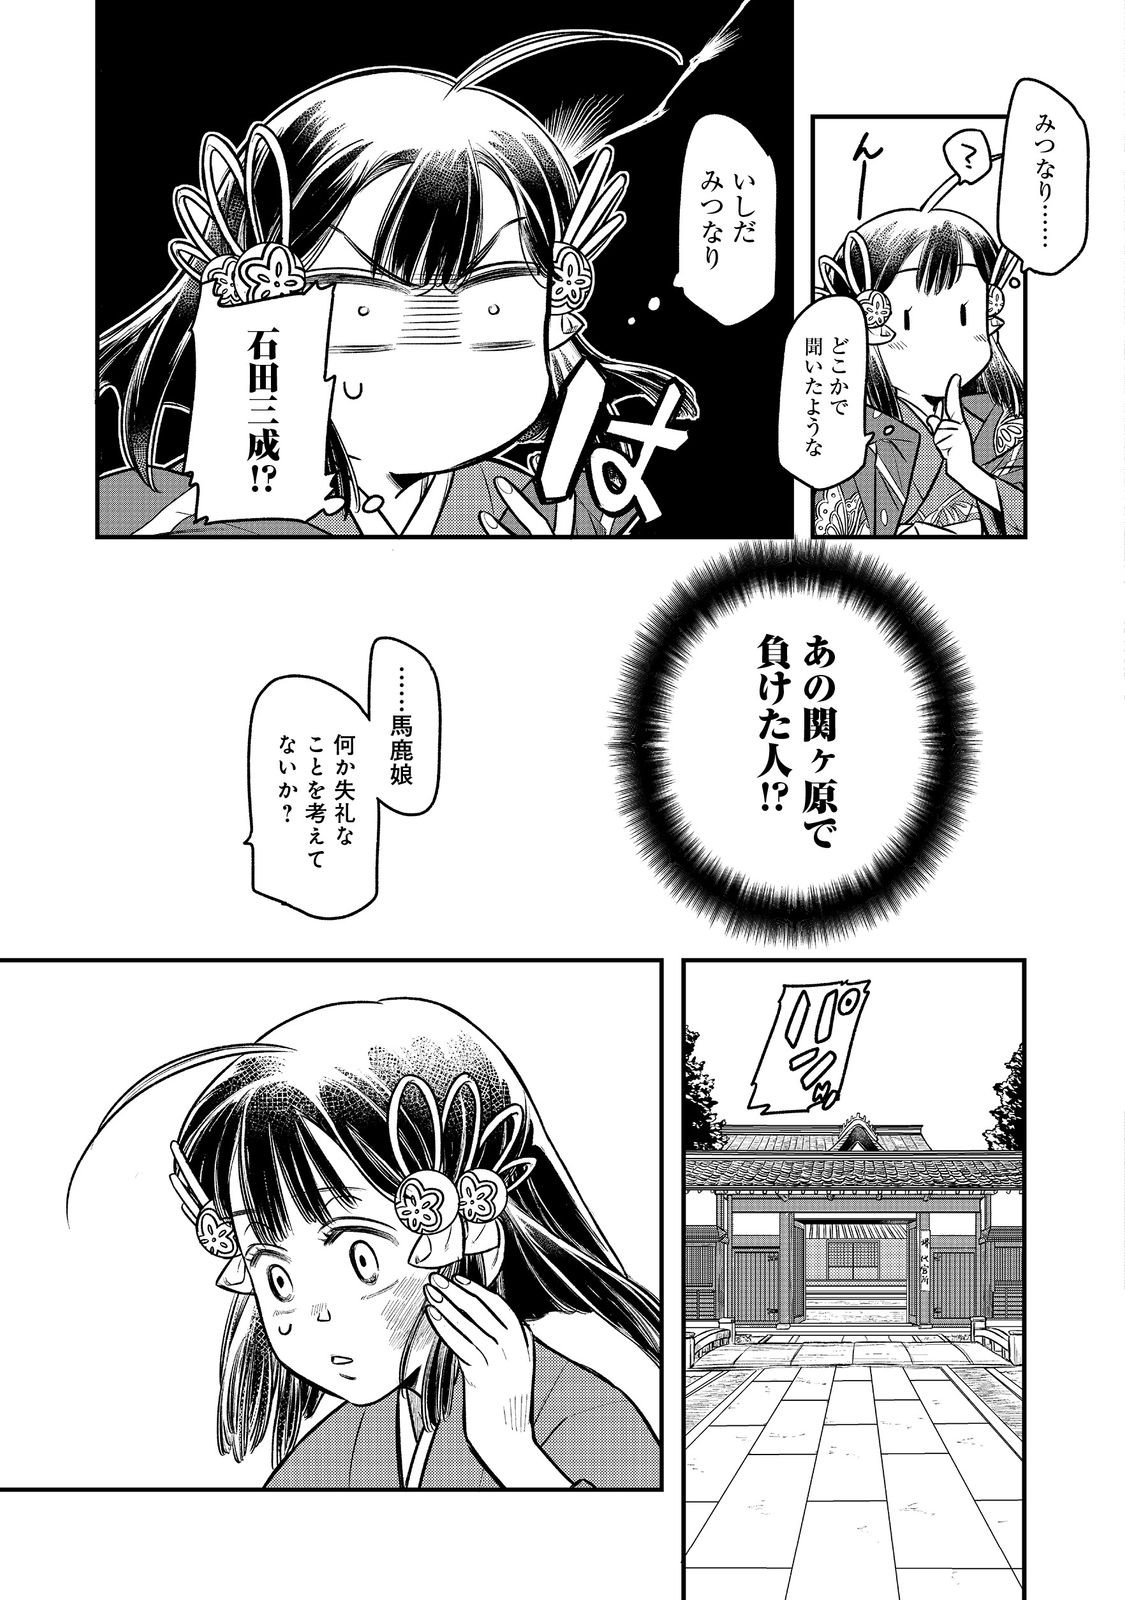 Kitanomandokoro-sama no Okeshougakari - Chapter 6.2 - Page 1